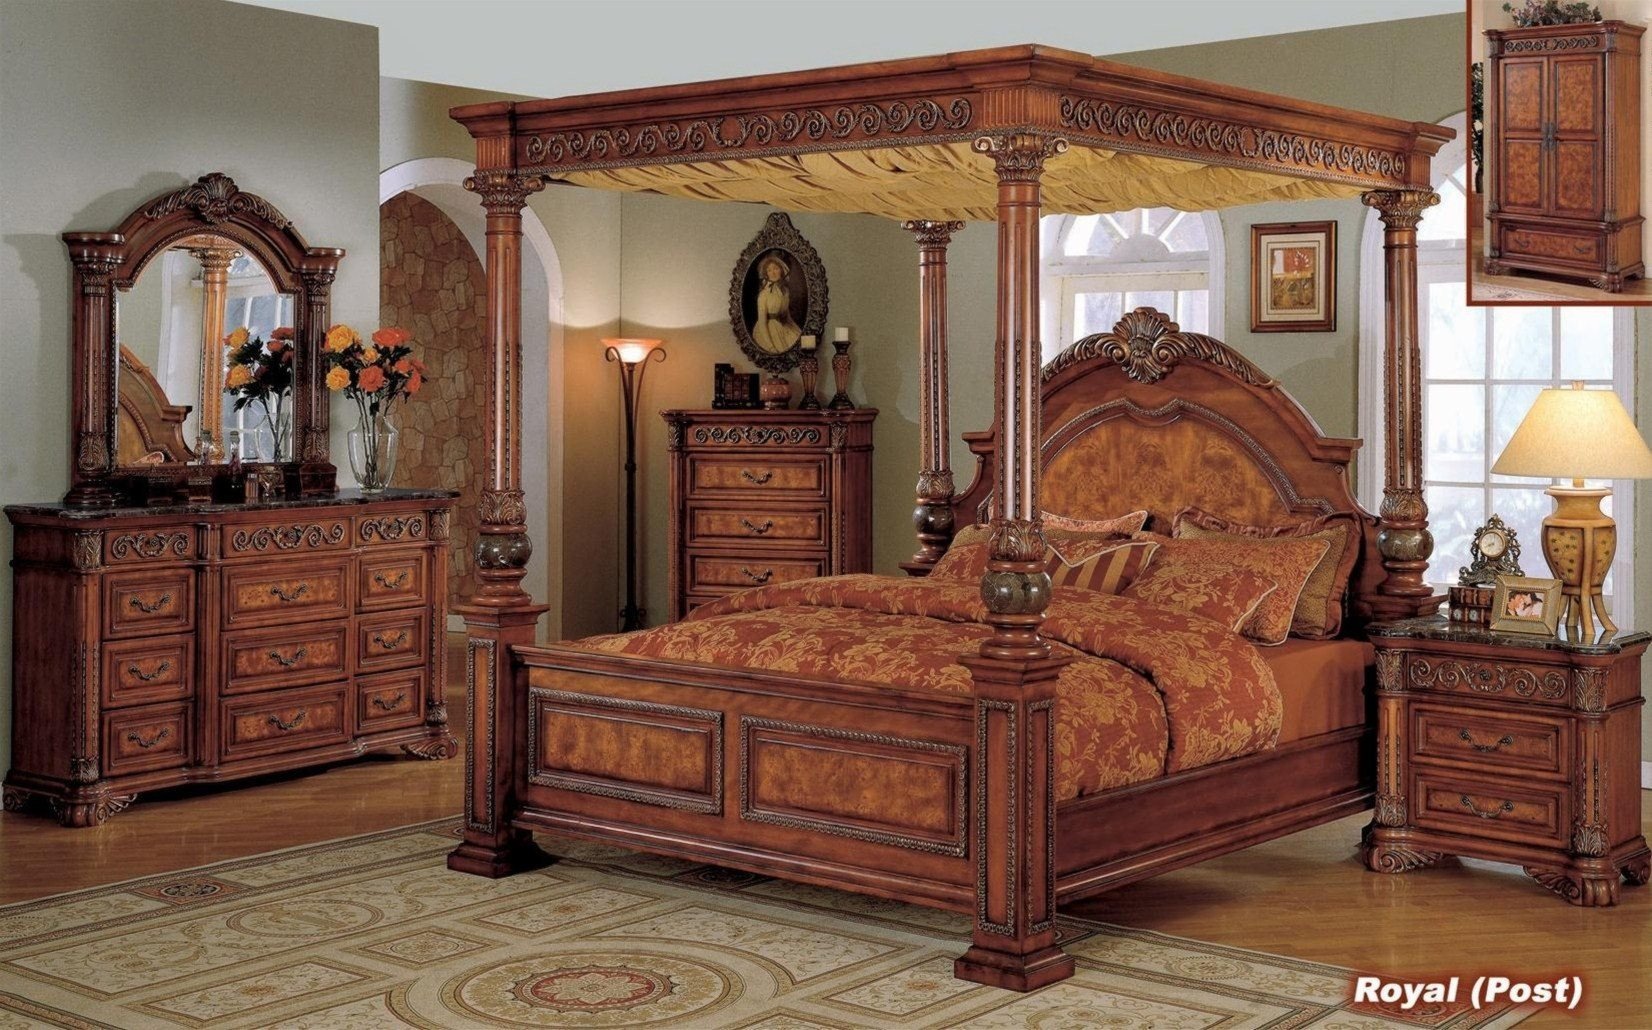 Solid Cherry Wood Bedroom Furniture Elegant solid Wood Bedroom Sets